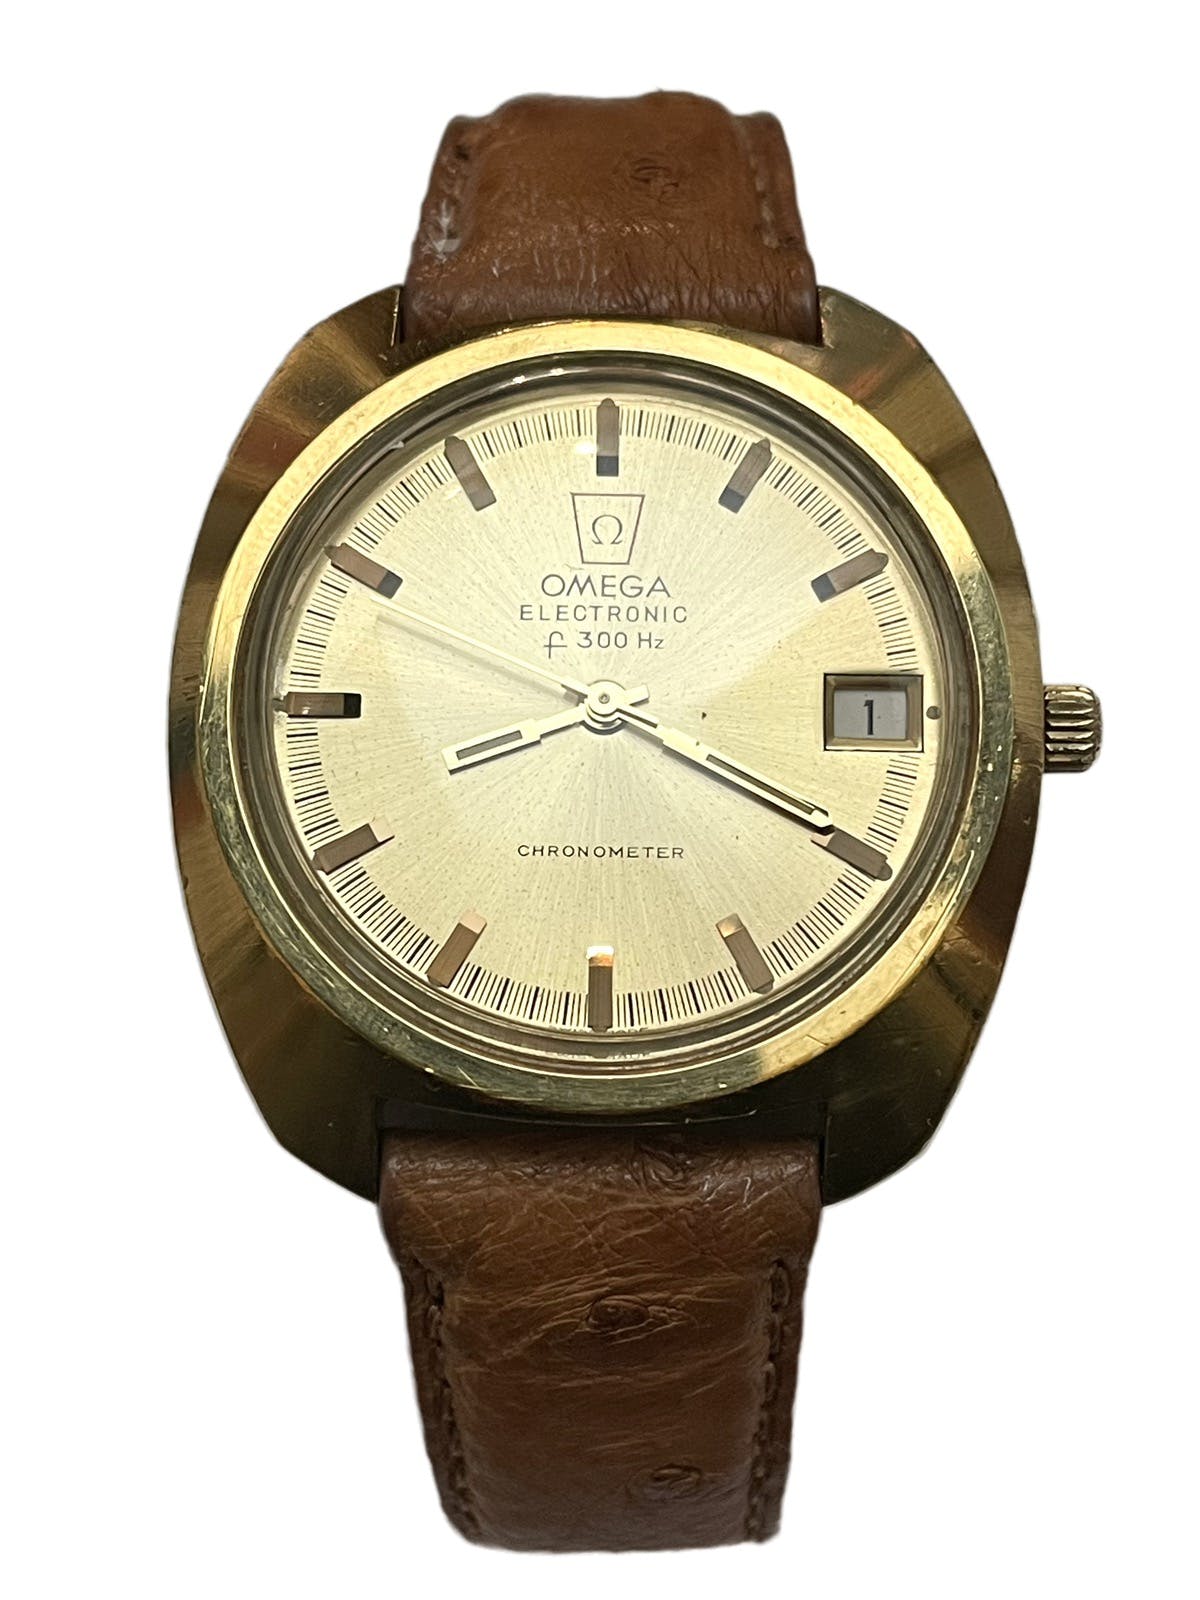 Omega - Vintage 1972 Gold Geneve Electronic Chronometer Watch - 1